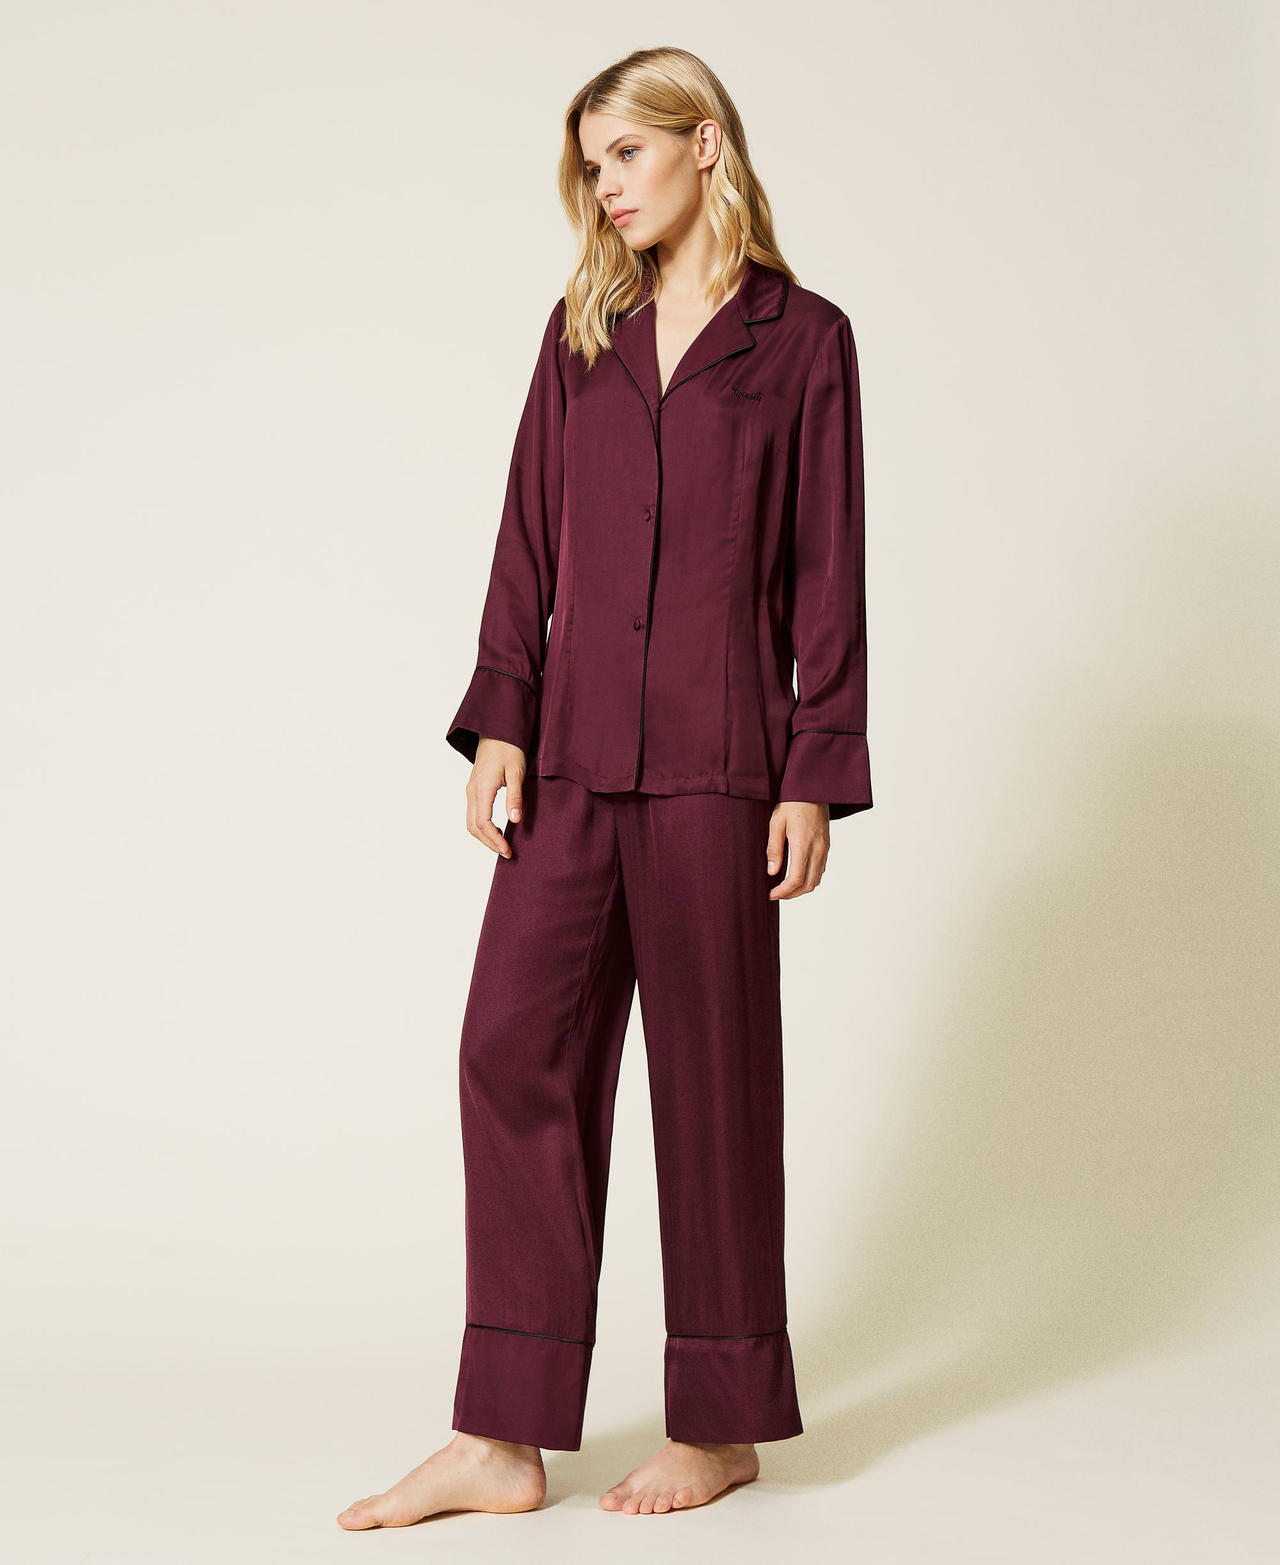 Pyjama long en satin Violet « Dark Wine » Femme 212LL2BYY-03